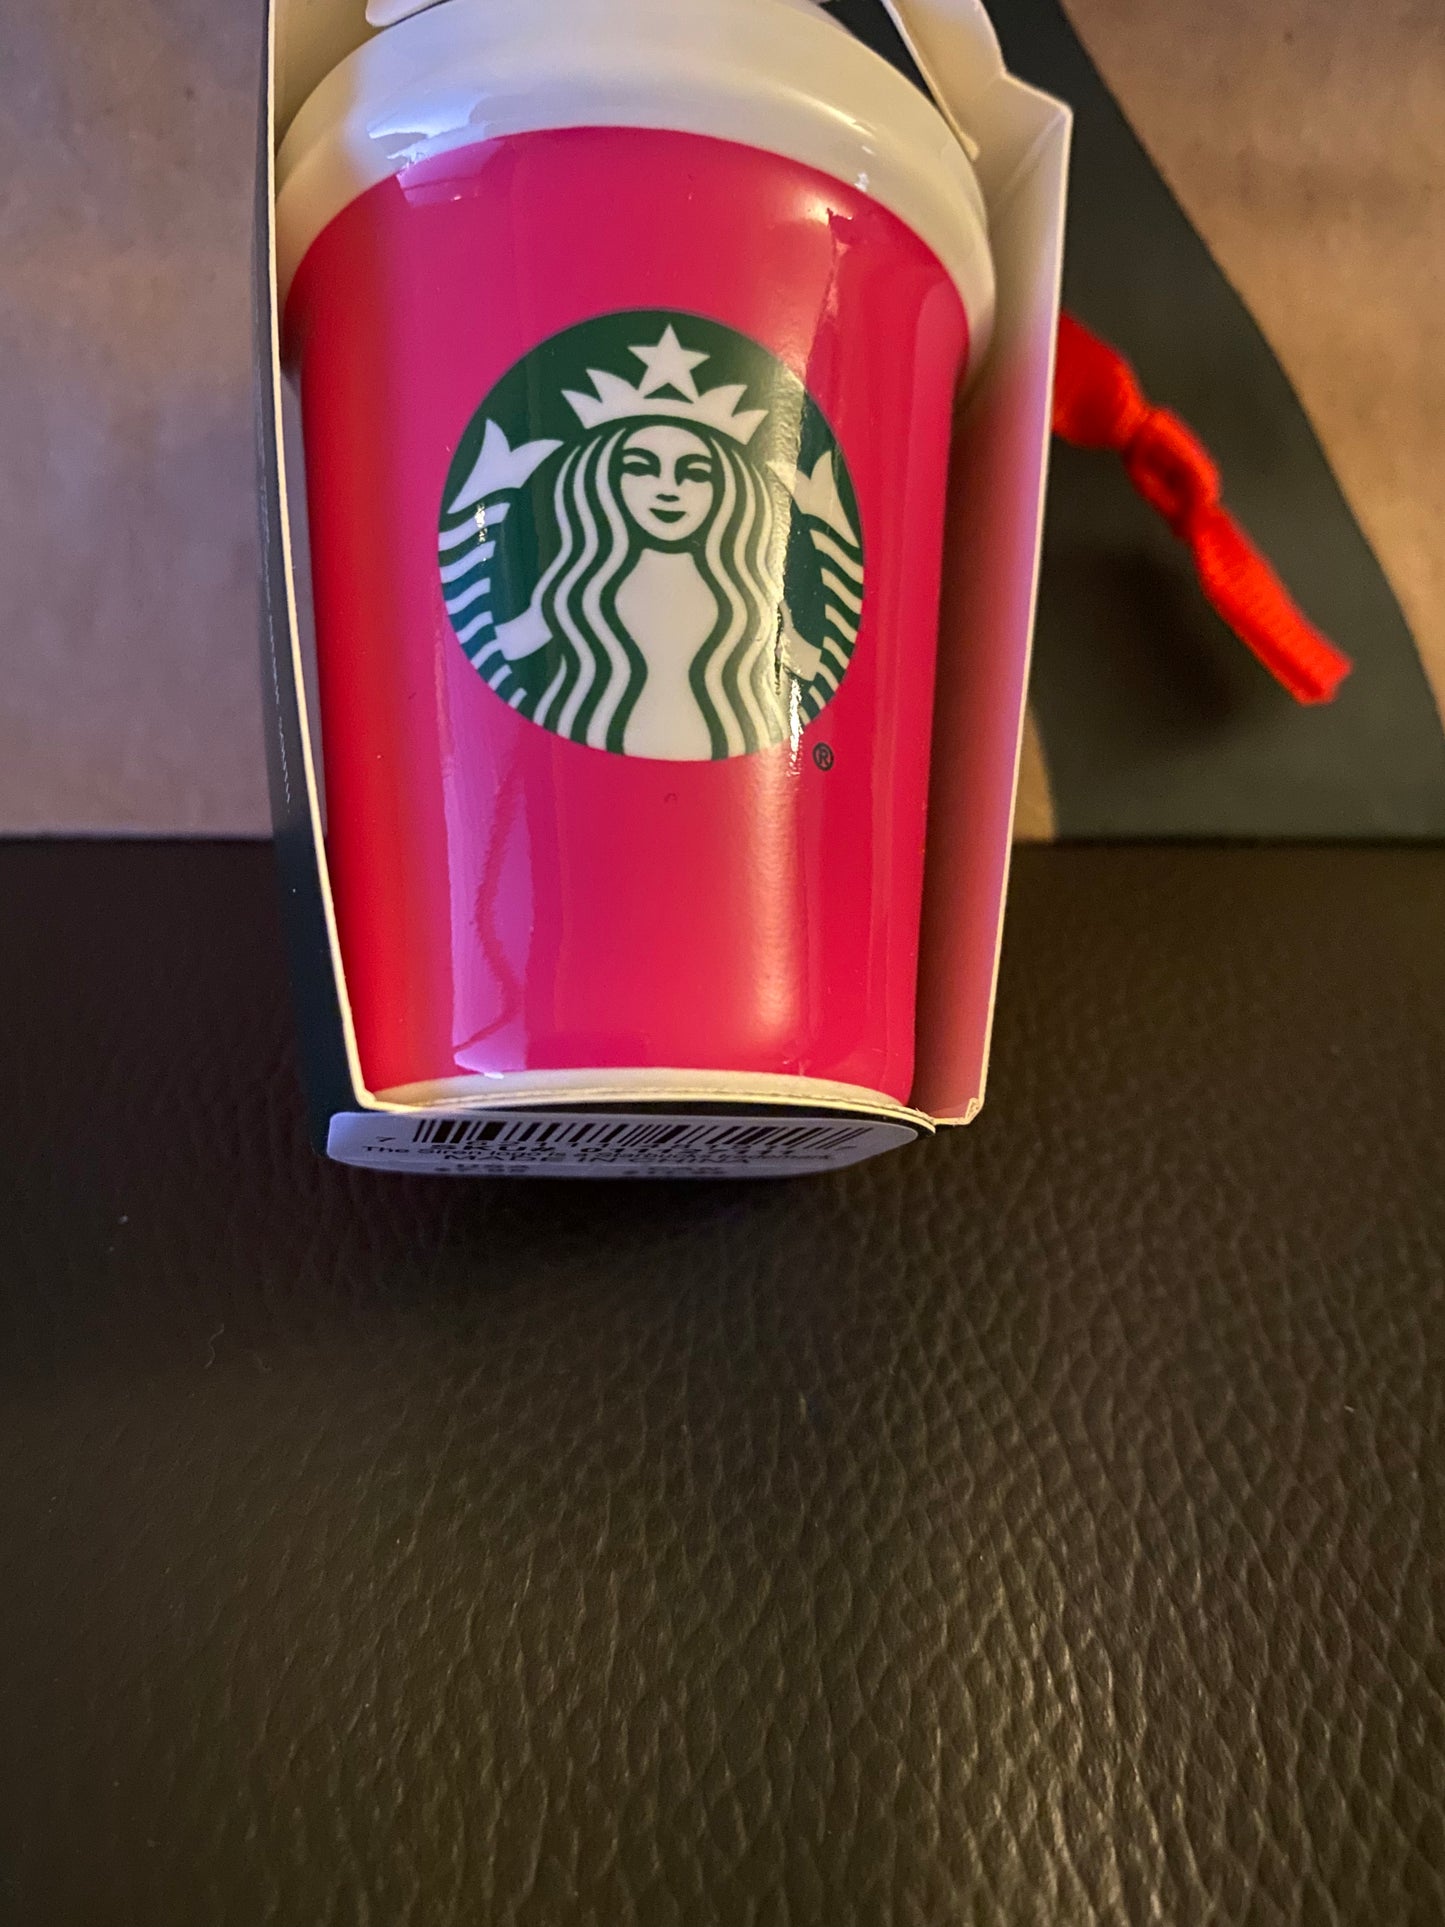 Starbucks Pink Christmas Ornament - Winter 2021